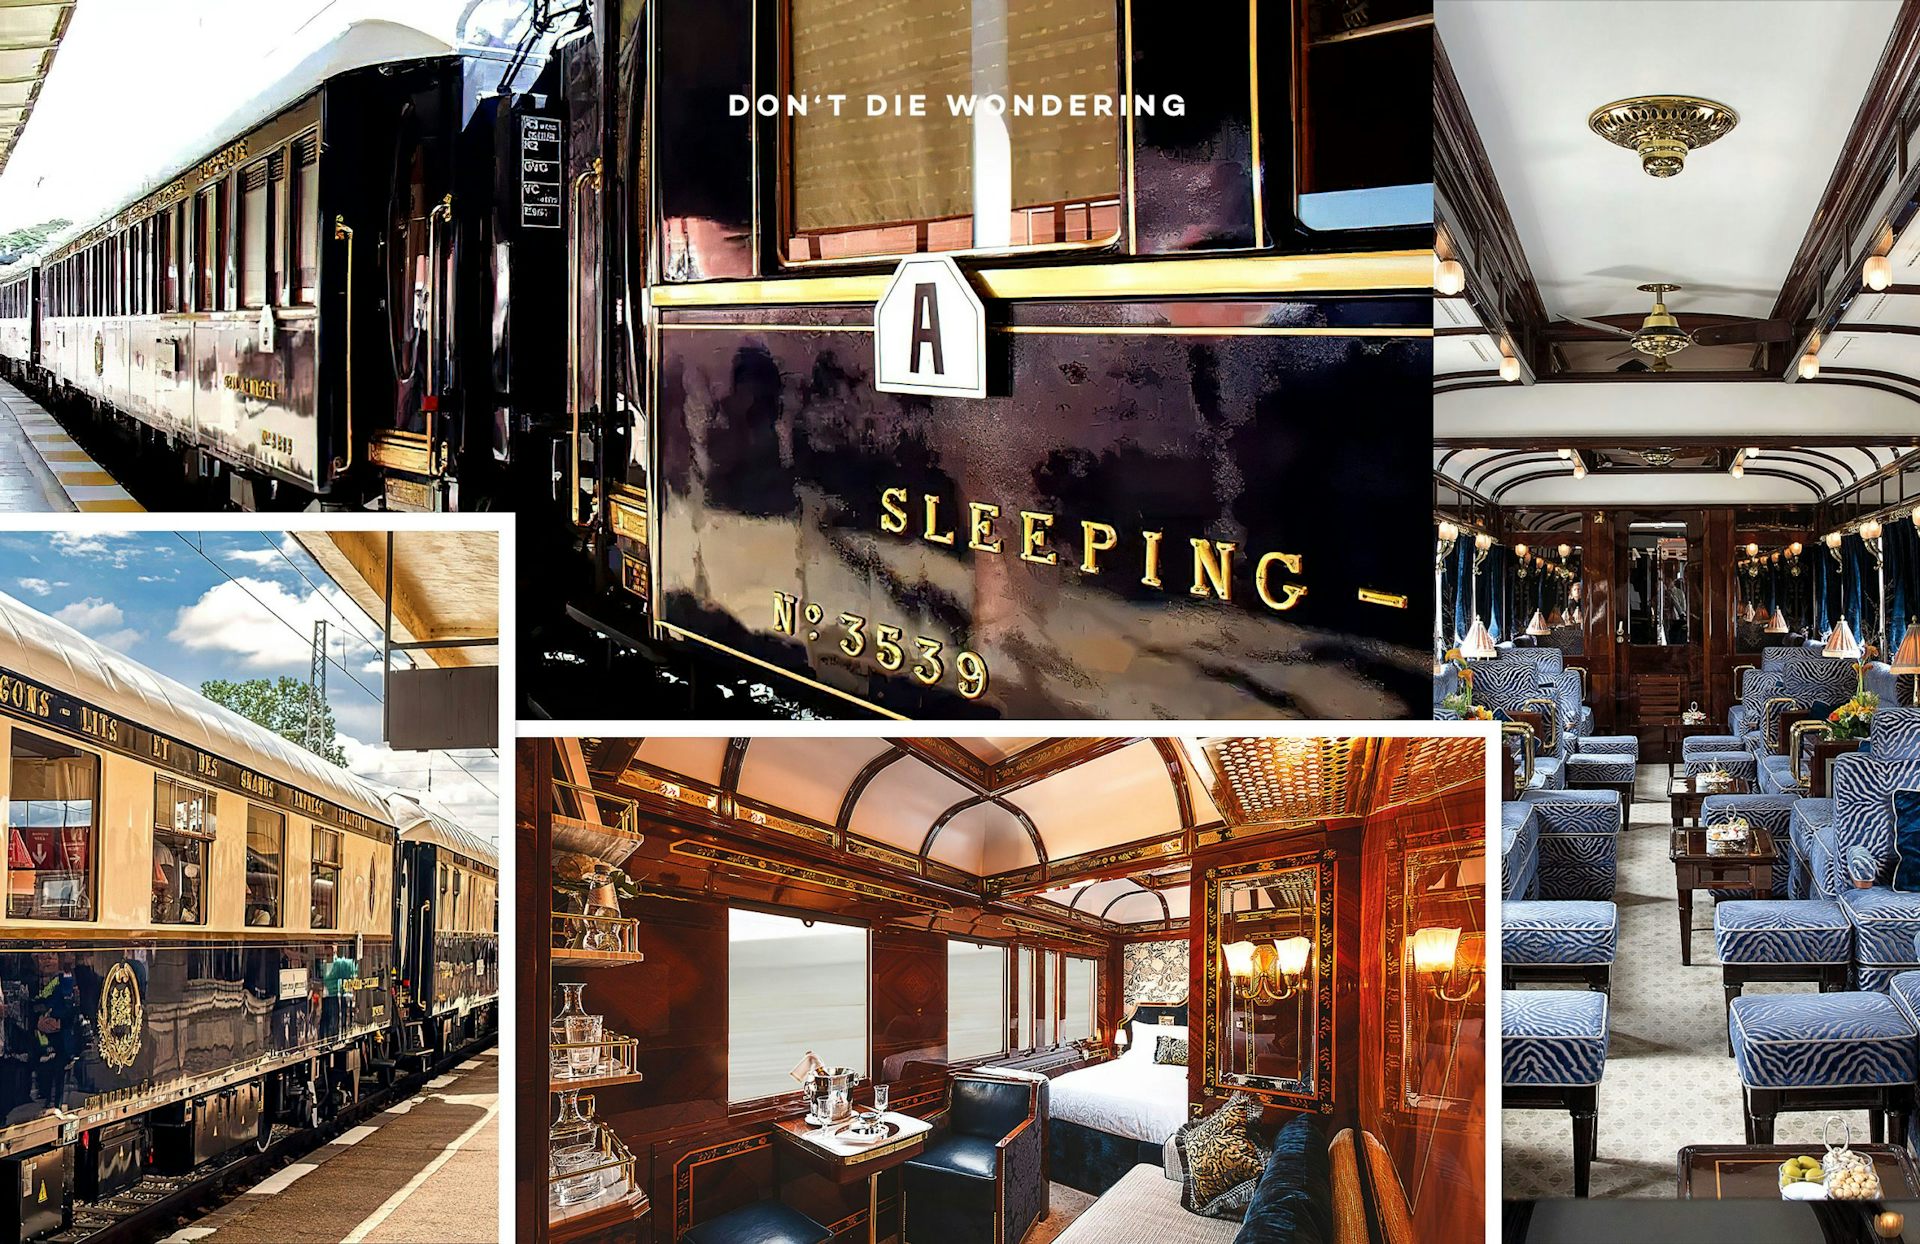 All Aboard the Venice Simplon-Orient-Express